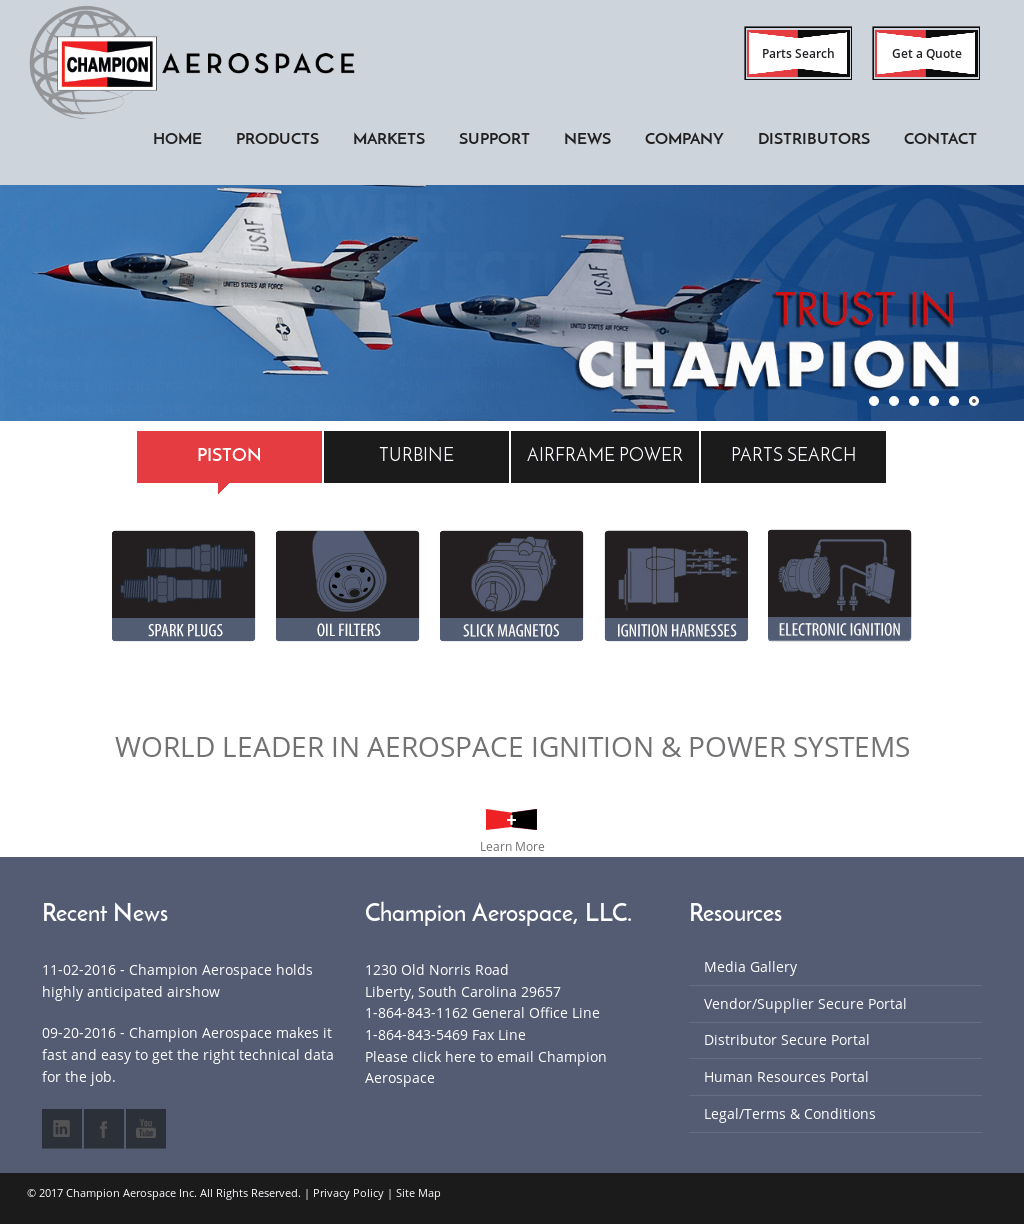 Champion Aerospace Logo - Champion Aerospace Competitors, Revenue and Employees